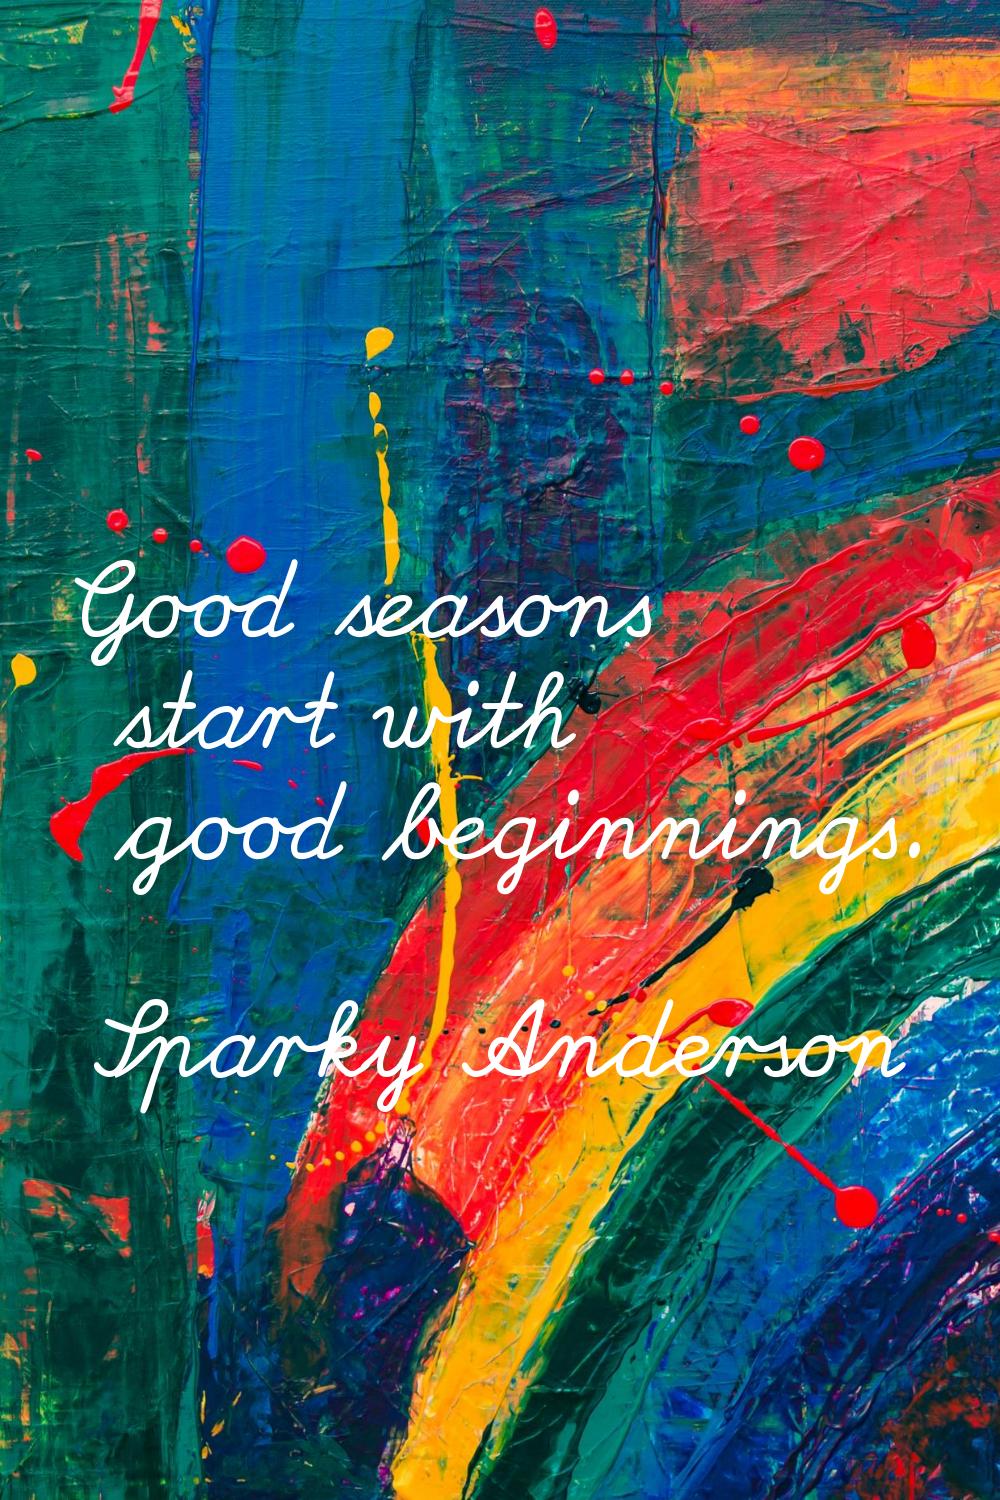 Good seasons start with good beginnings.